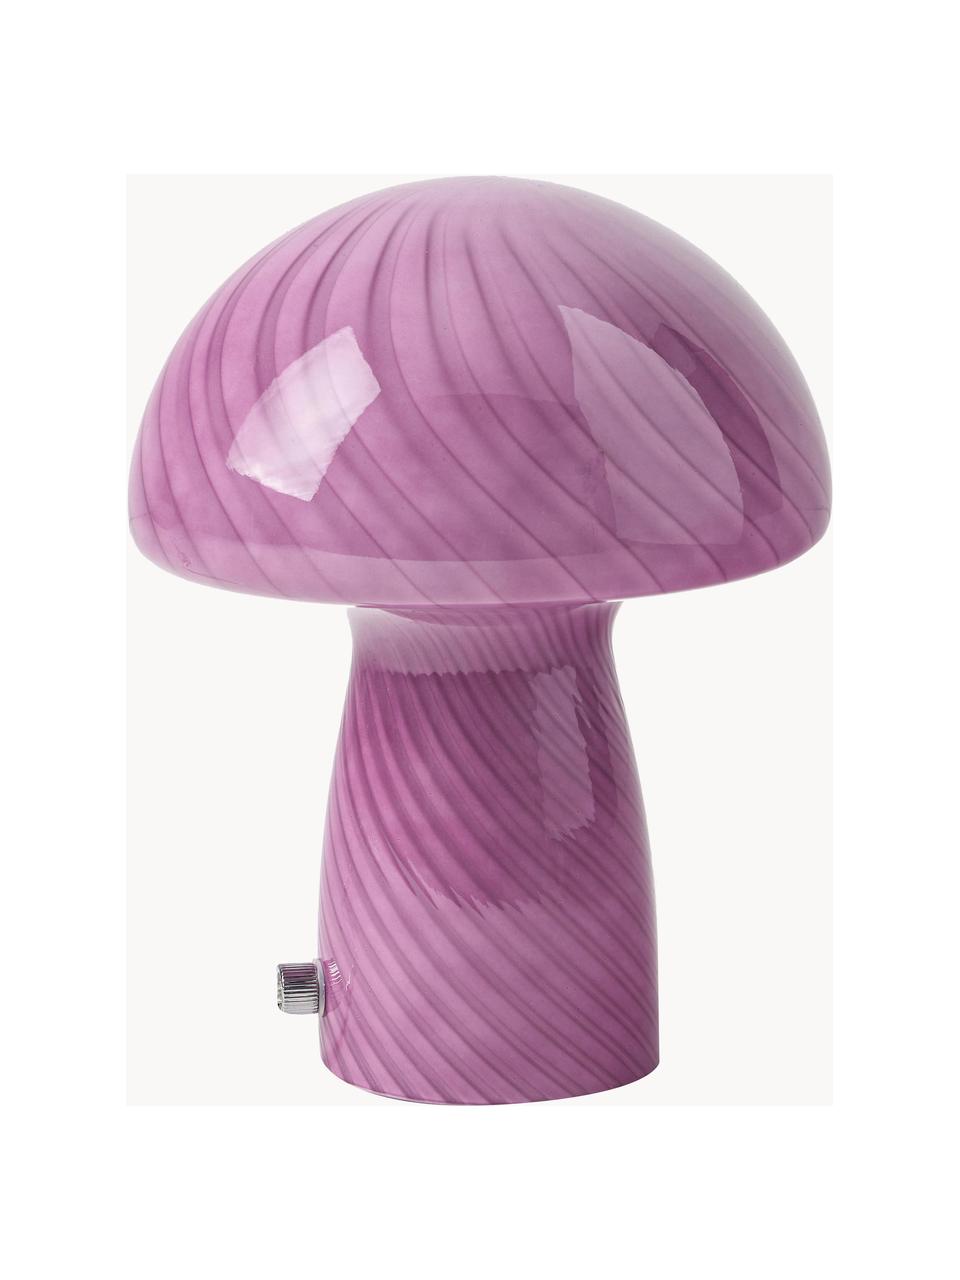 Kleine tafellamp Mushroom van glas, Lamp: glas, Lila, Ø 19 x H 23 cm